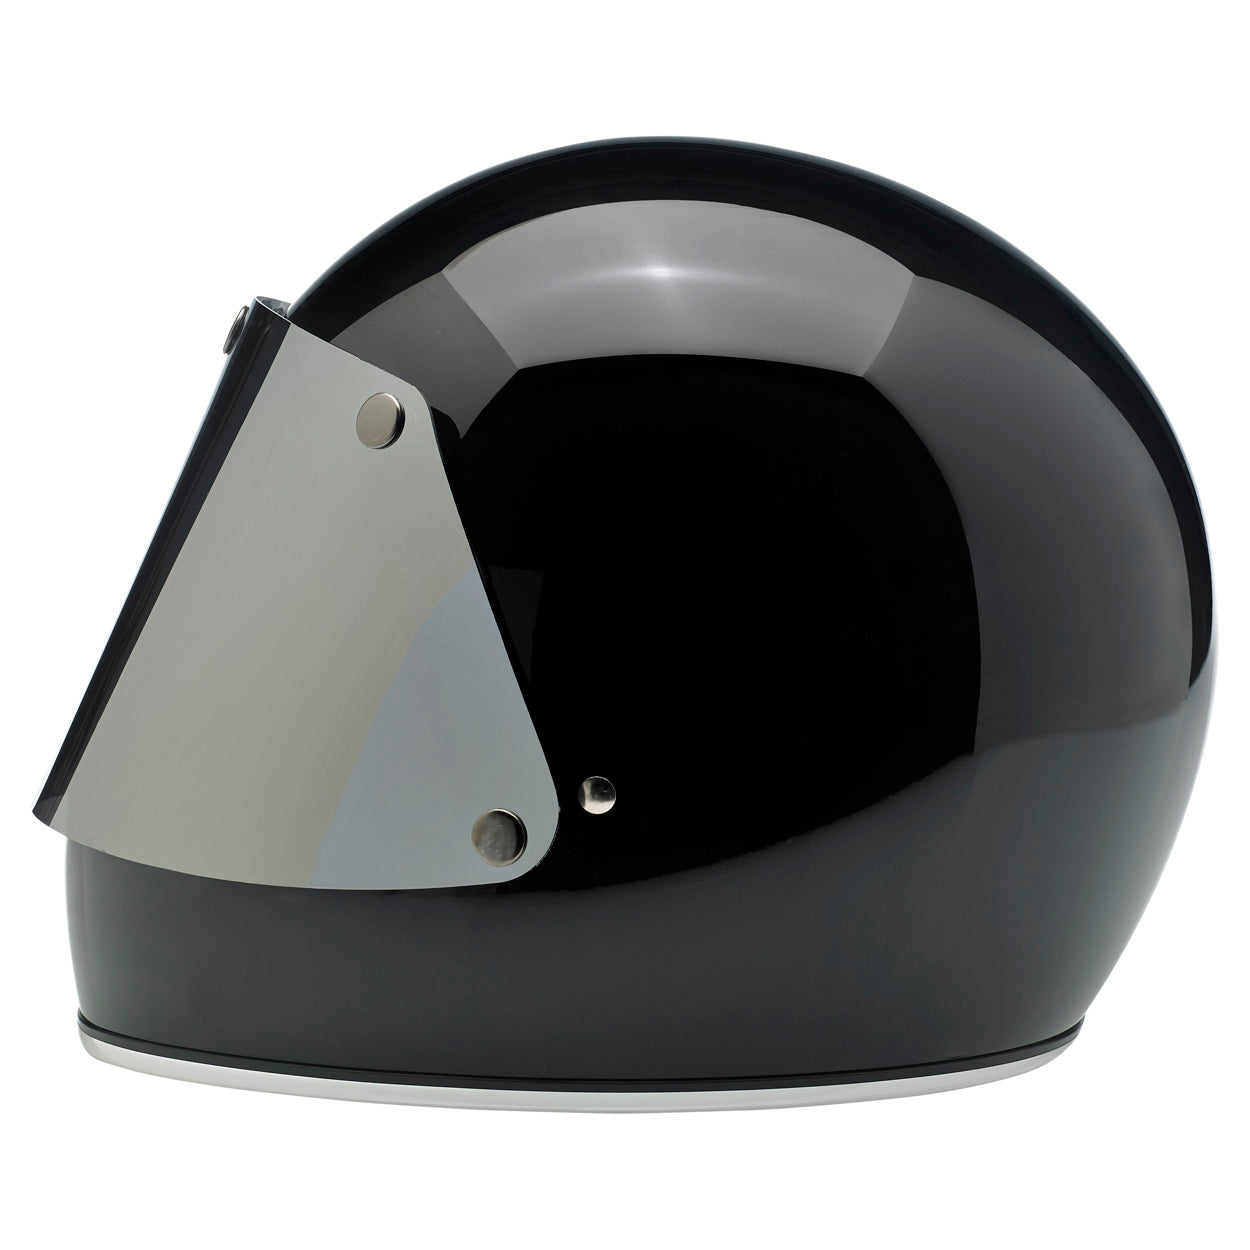 Gringo Blast Shield - Chrome Mirror - L/2XL